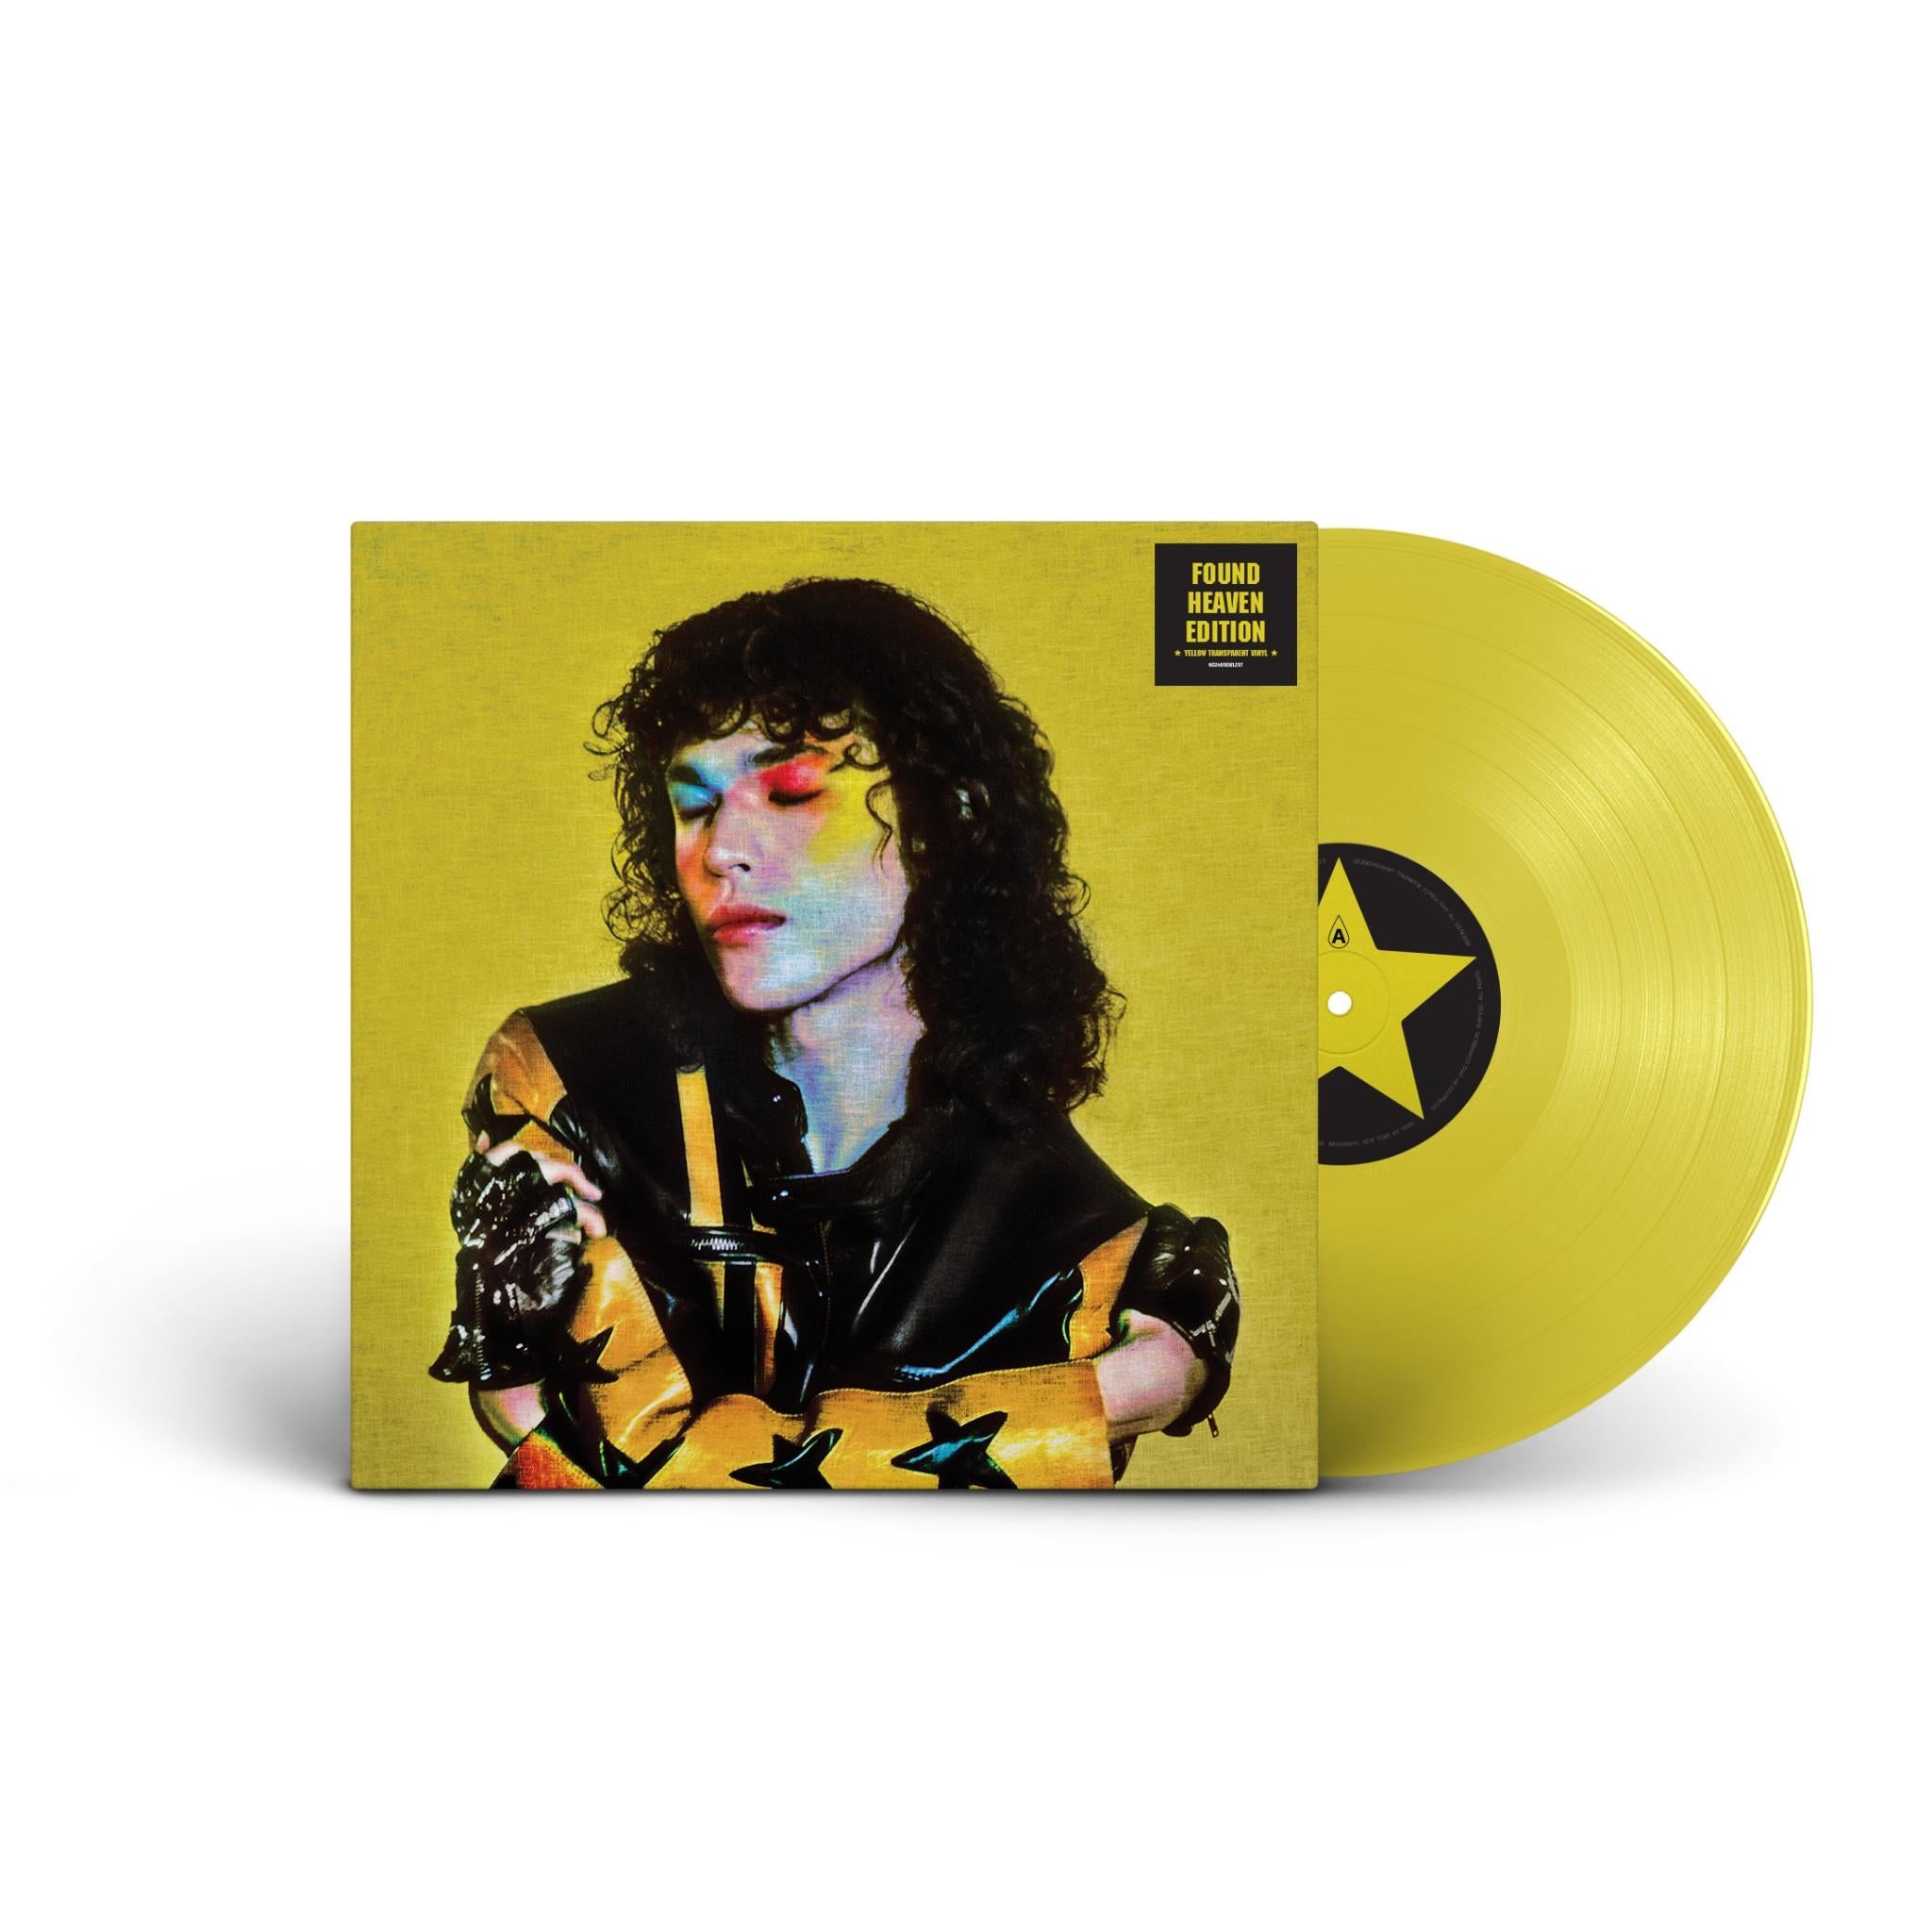 found heaven (translucent yellow vinyl)